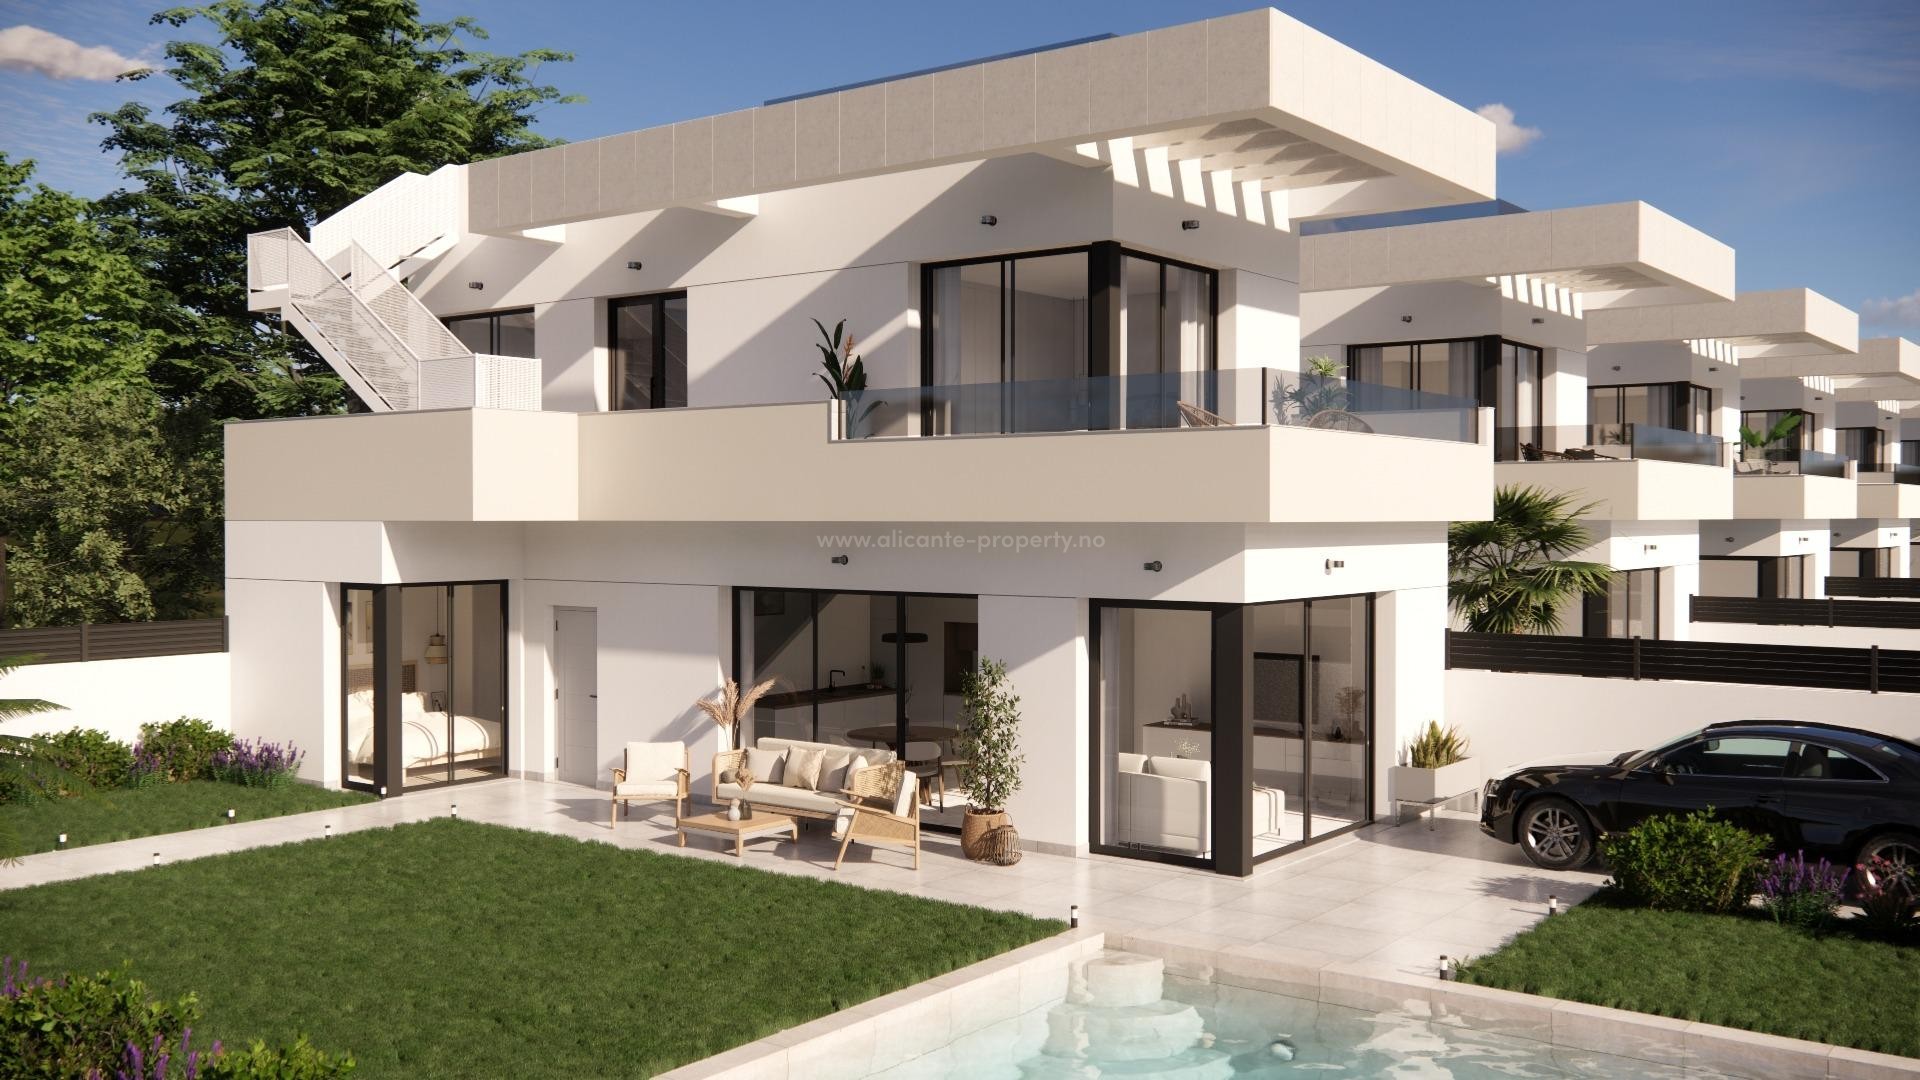 Semi-detached house in Los Montesinos (La Herrada), 3 bedrooms, 2 bathrooms, terrace, garden, possibility of pool. 10 minutes from beaches